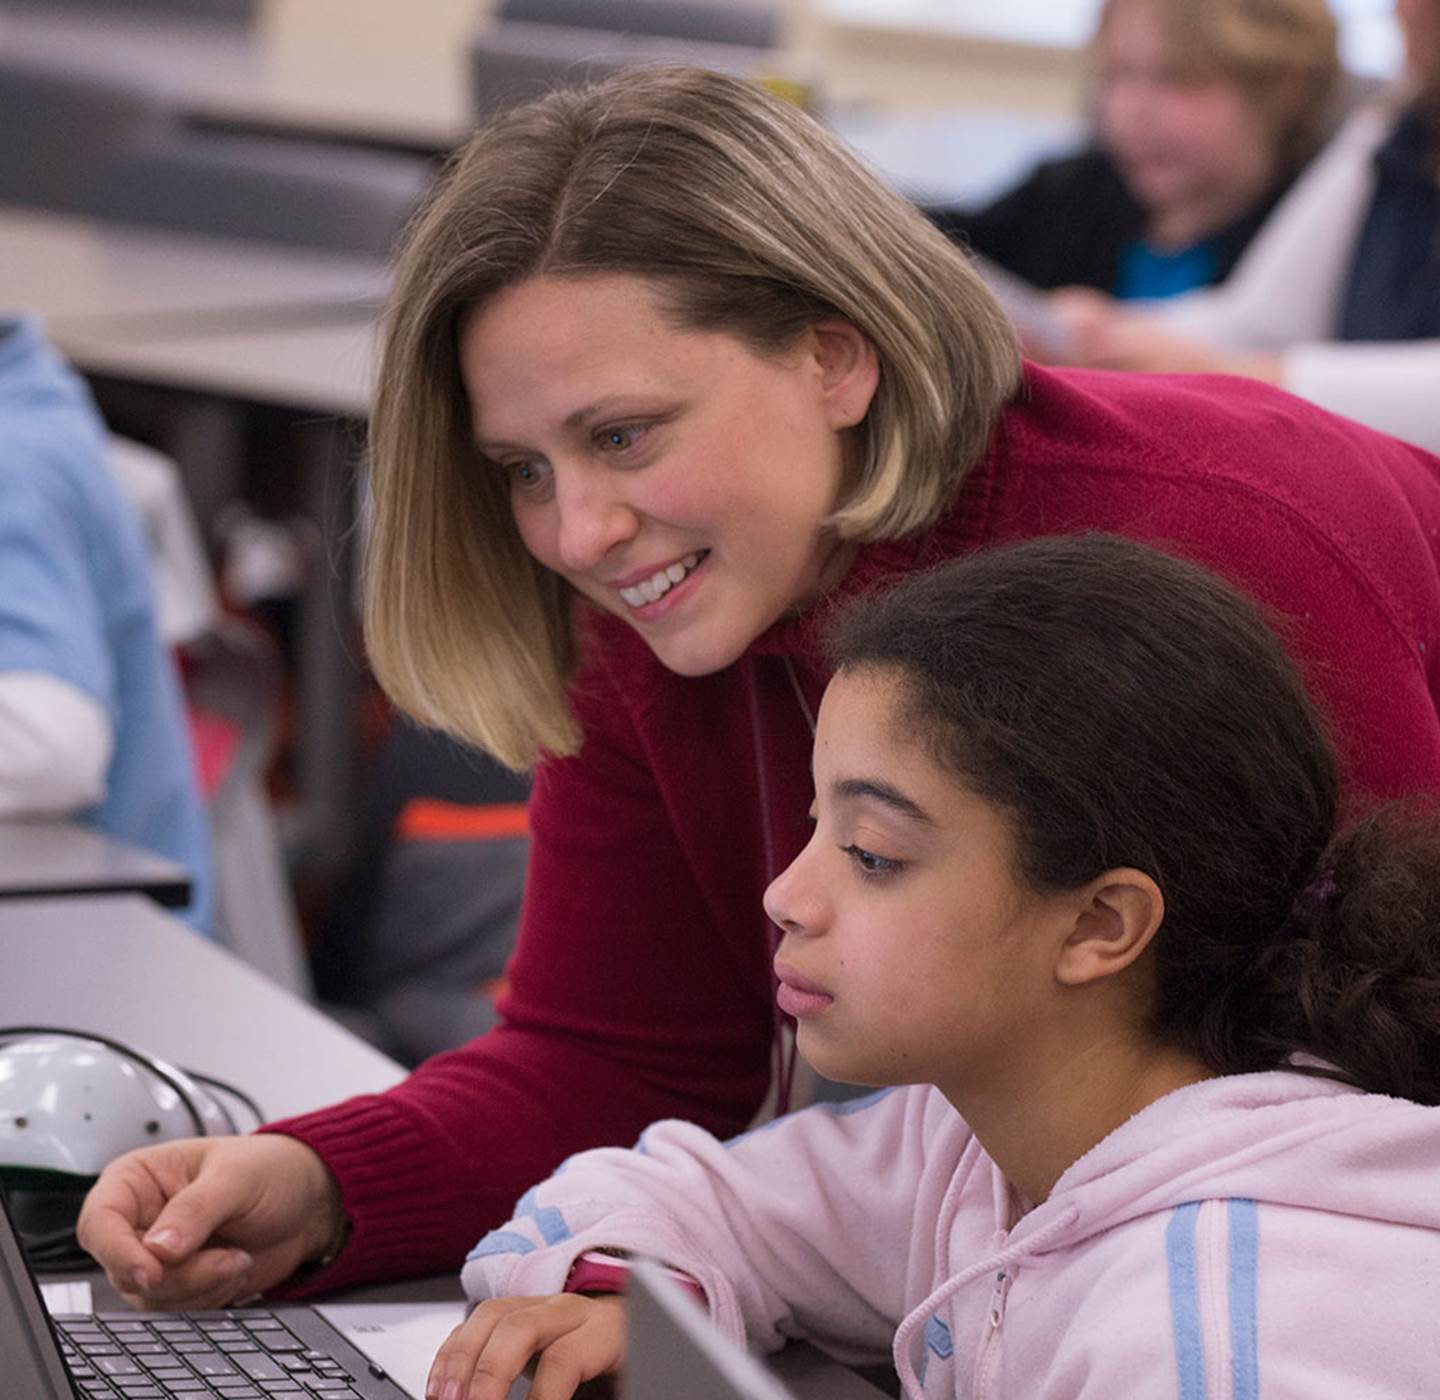 A teacher helping a student on a laptop.